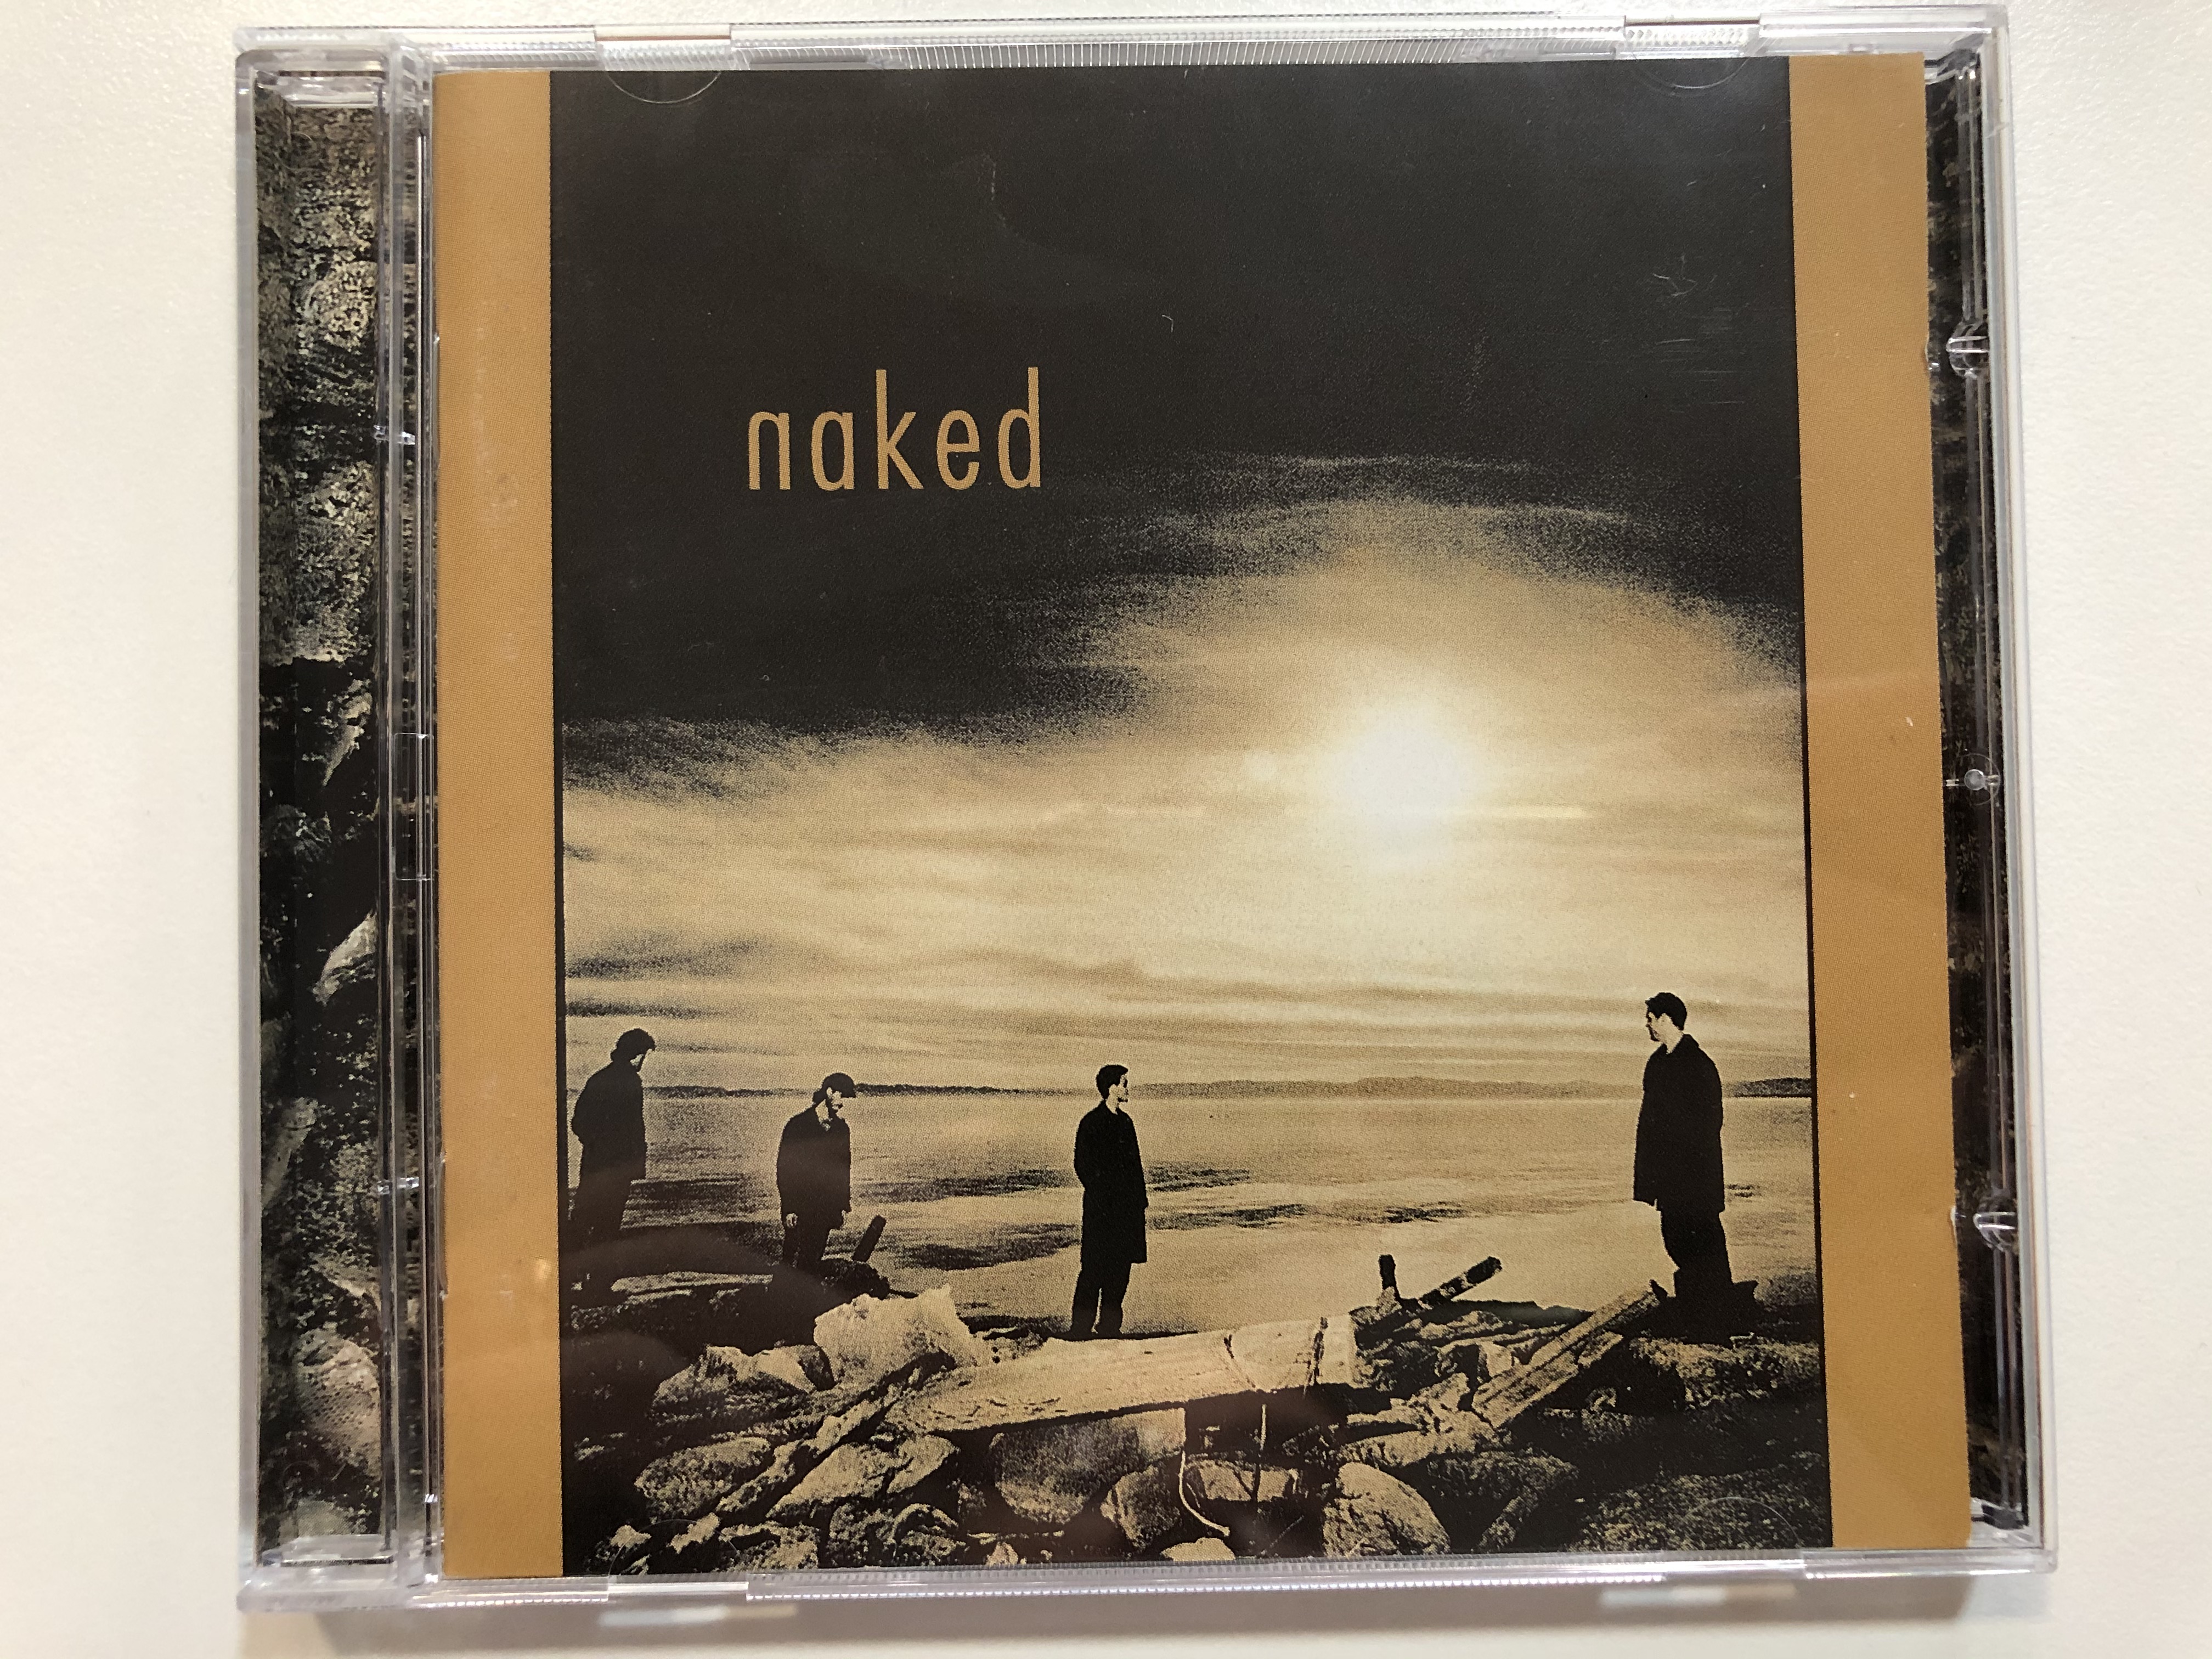 naked-red-ant-entertainment-audio-cd-1997-530-0-265-1-.jpg